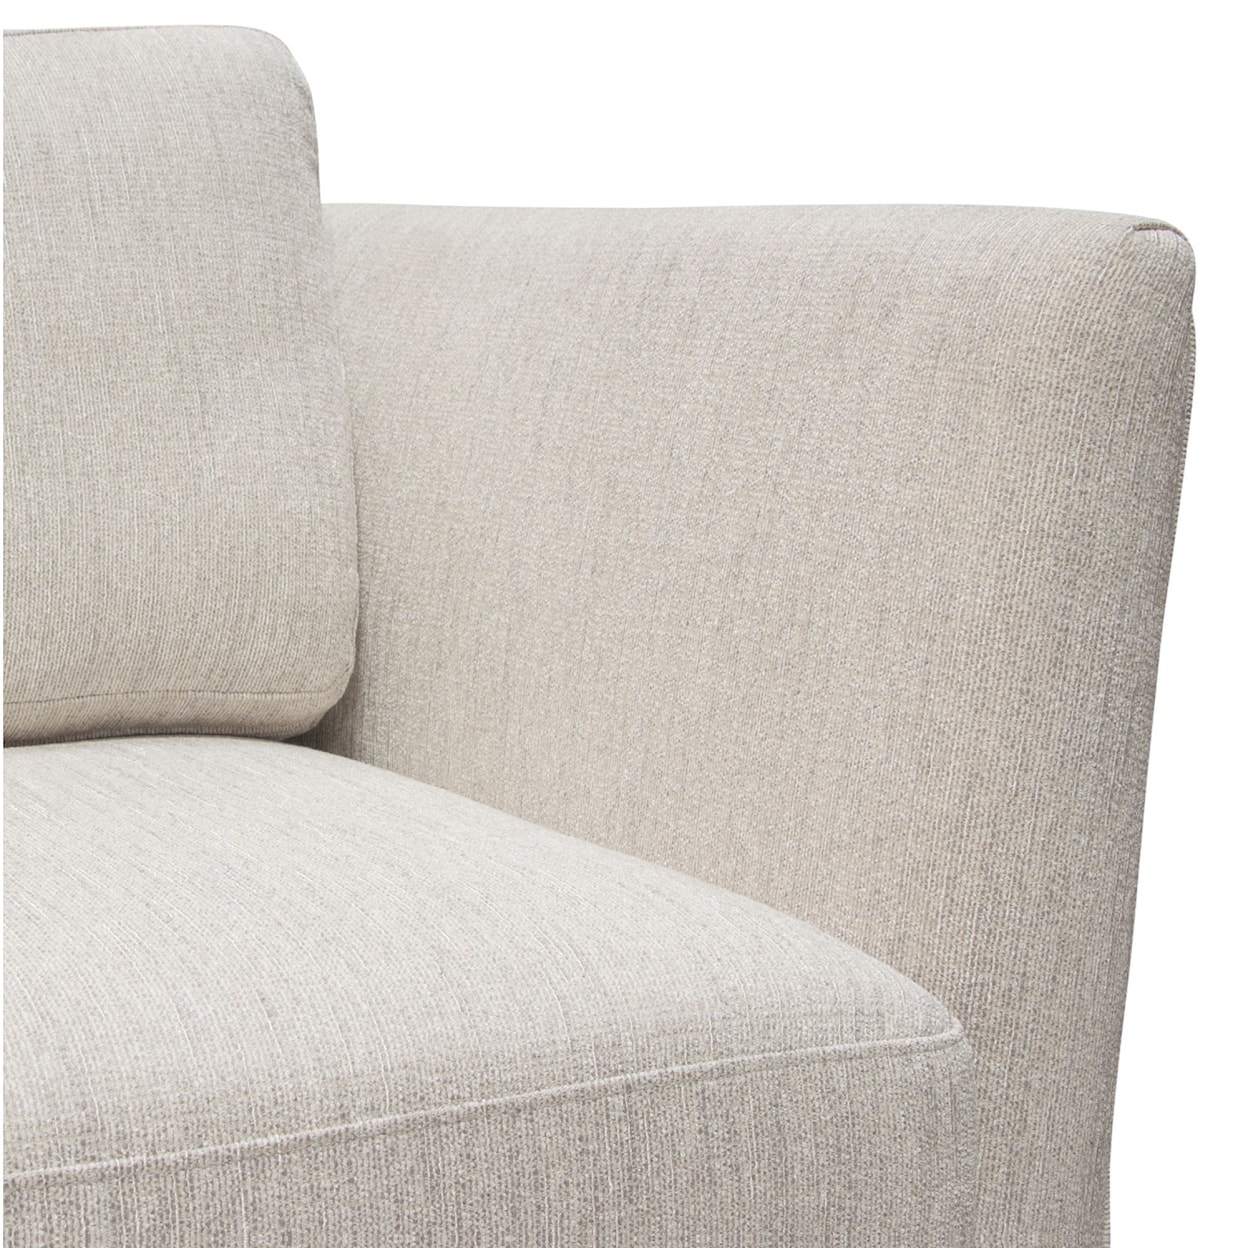 Diamond Sofa Furniture Lane Chair in Light Cream Fabric with Gold Metal